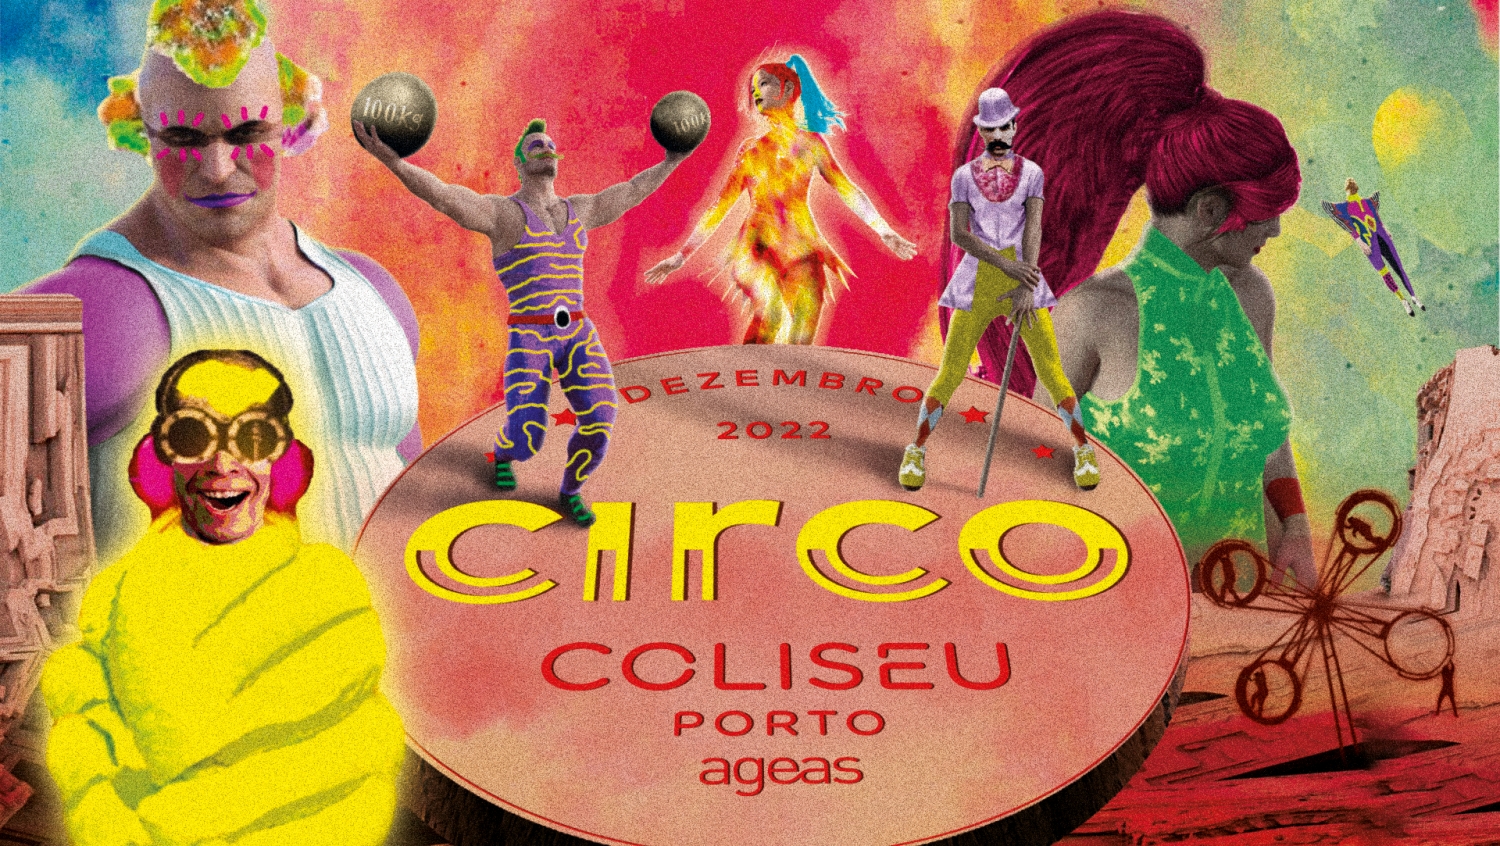 Circo Coliseu Porto Ageas